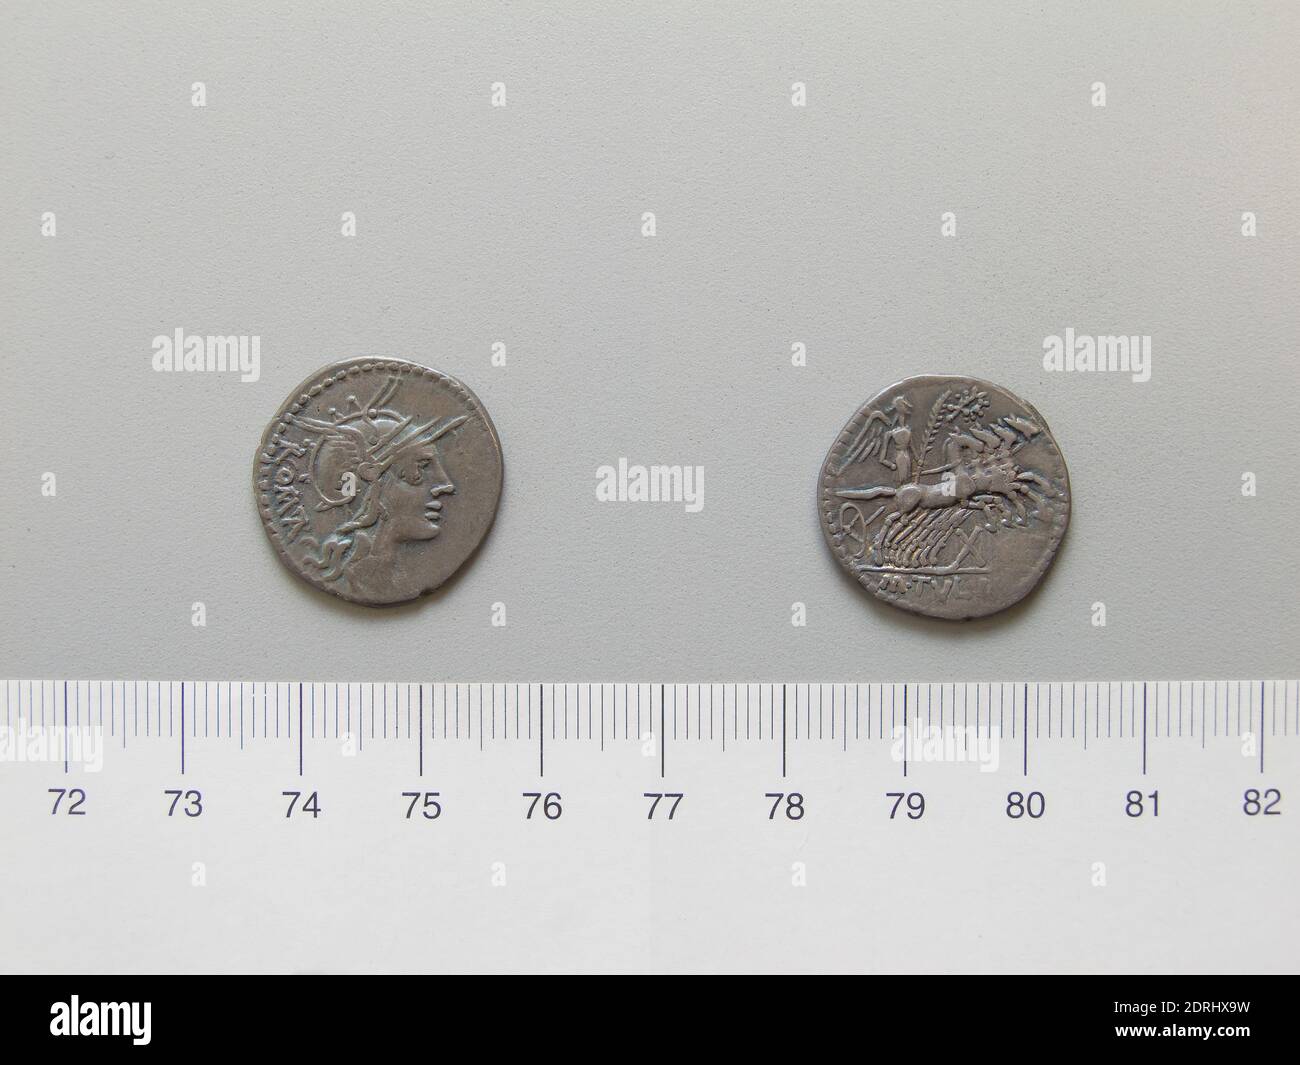 Mint: Rome, Magistrate: M. TVLLI, Denarius from Rome, 120 B.C., Silver, 3.92 g, 2:00, 21 mm, Made in Rome, Italy, Roman, 2nd century B.C., Numismatics Stock Photo